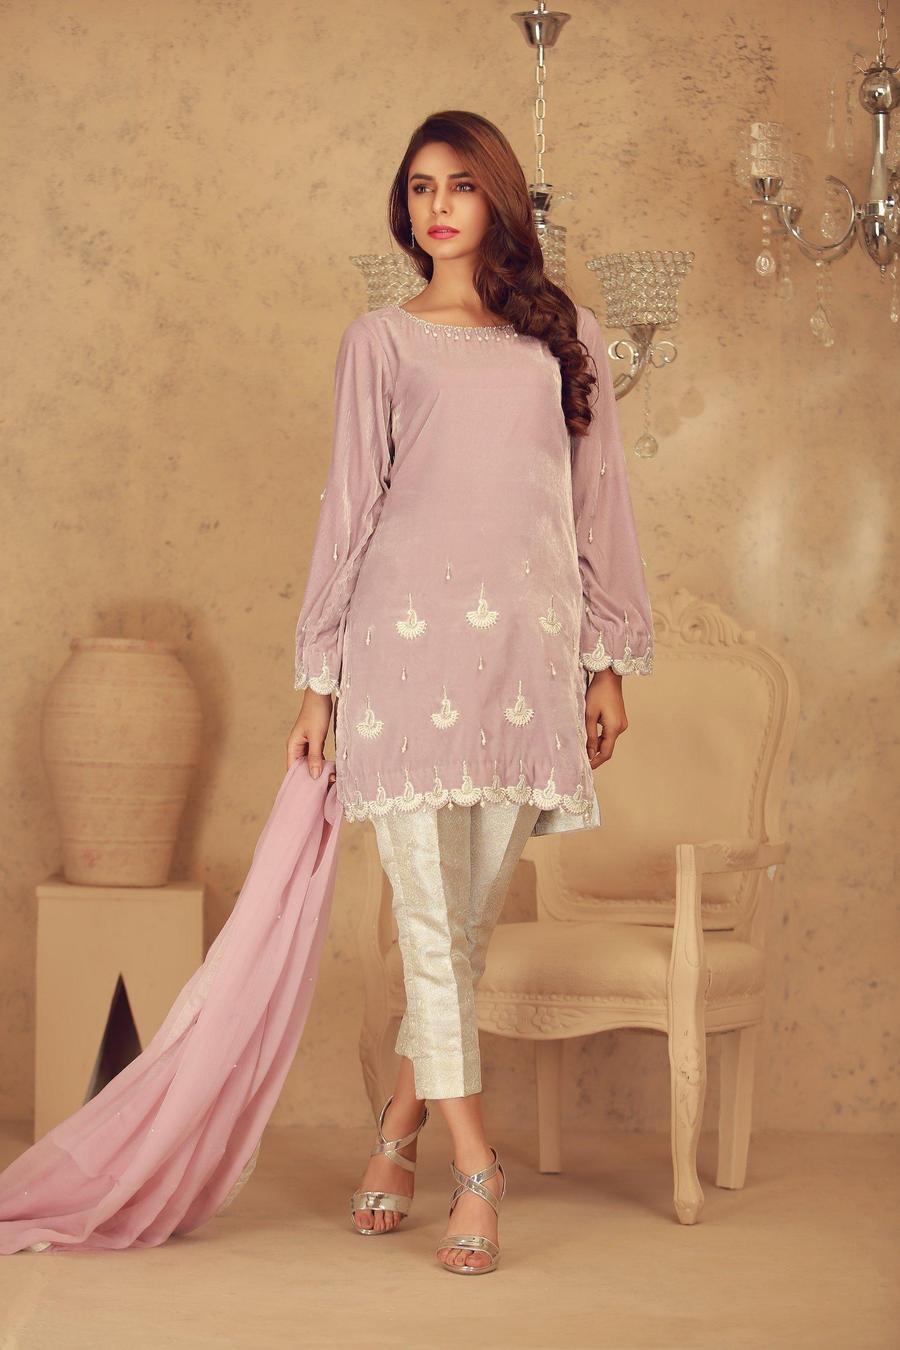 Velvet Lavender Pakistani Party Outfit by Sarosh Salman